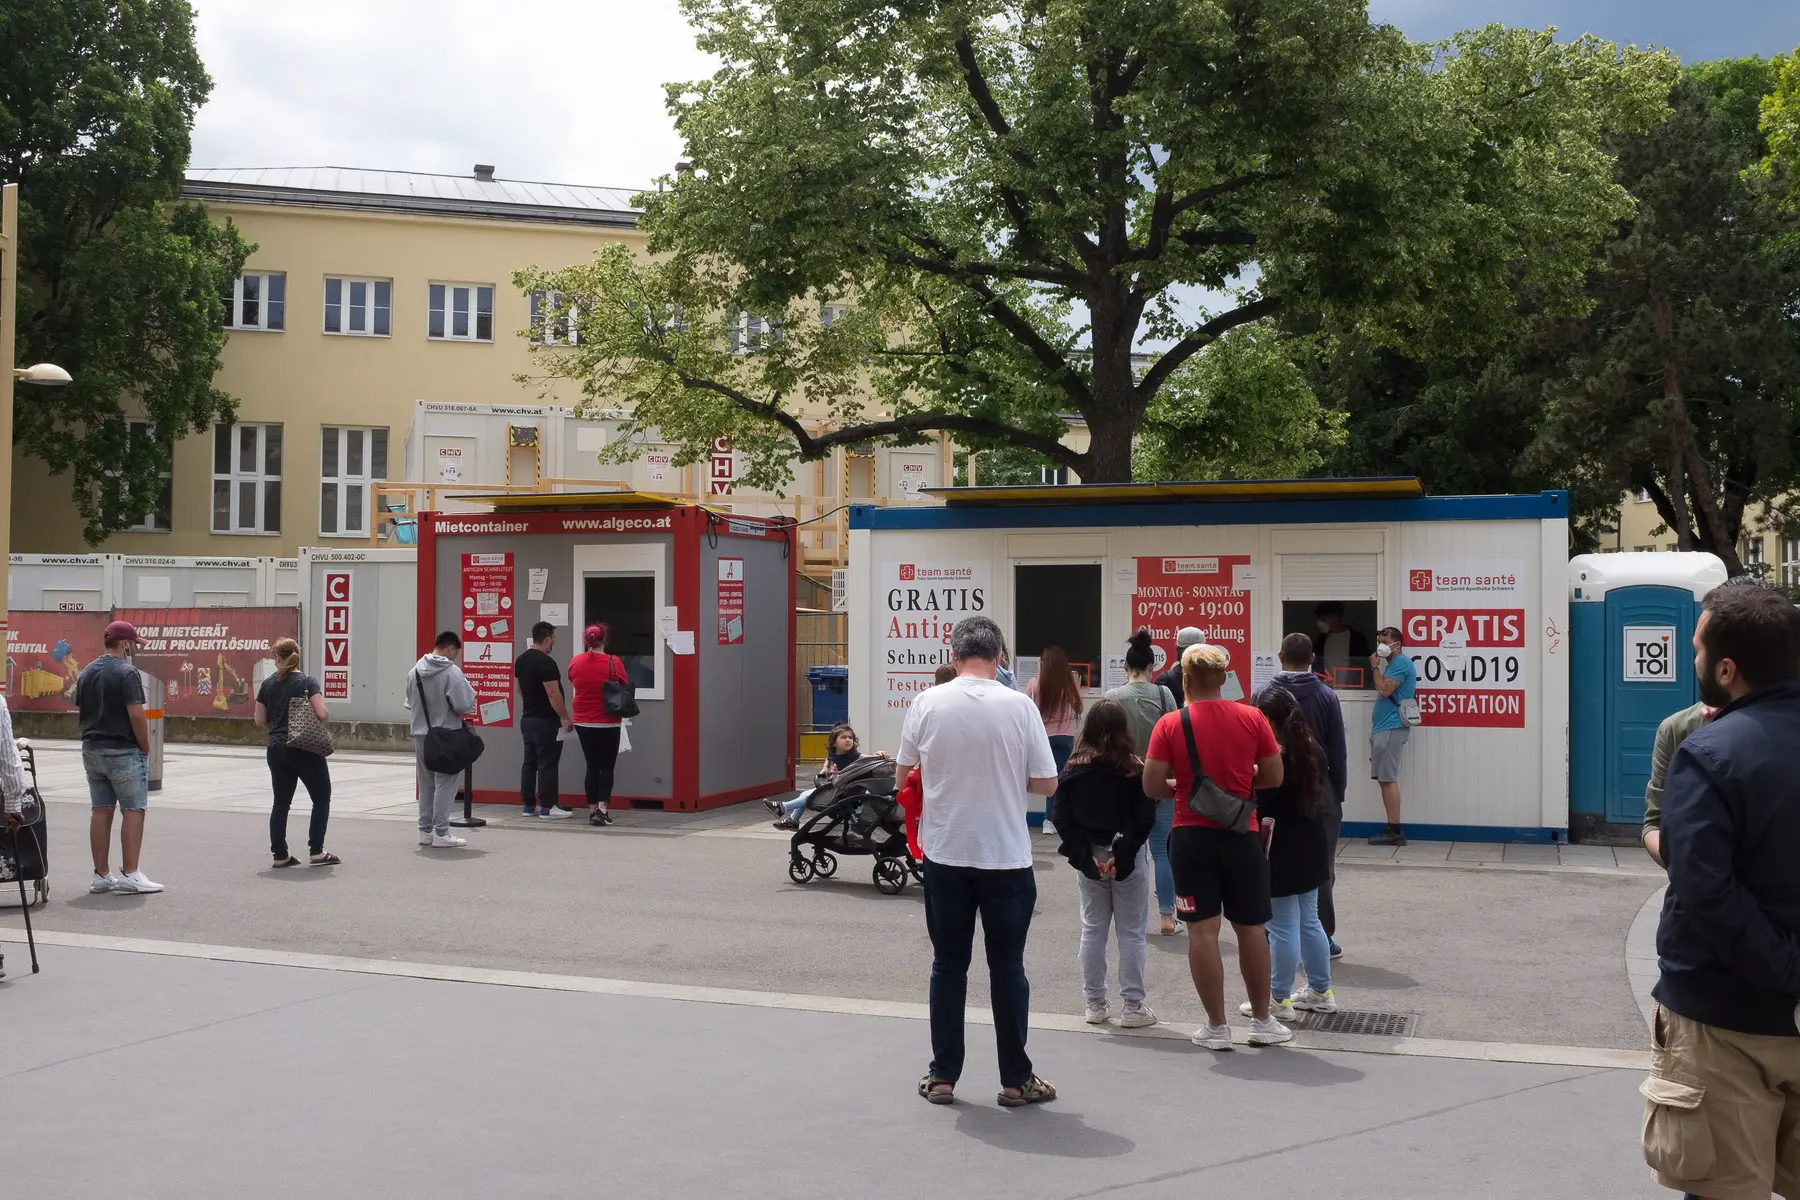 A mobile coronavirus testing center in Austria